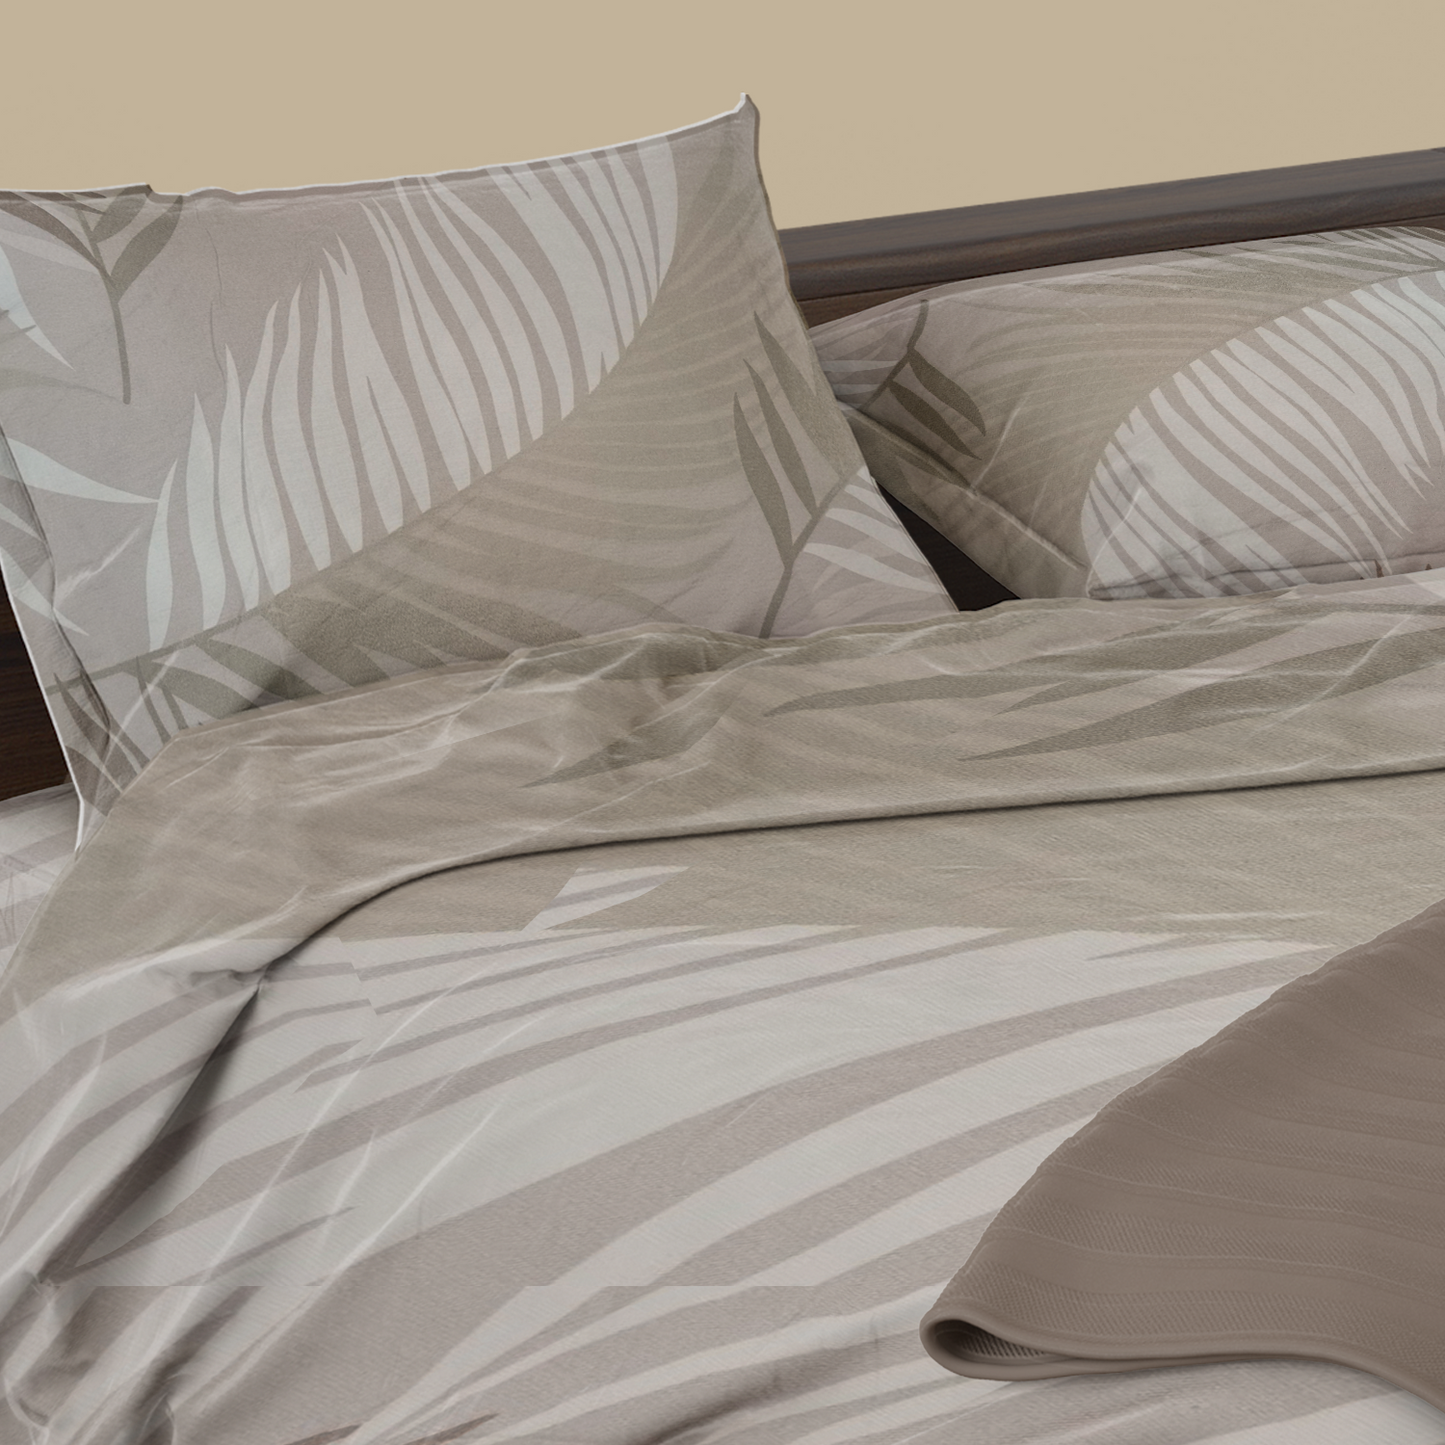 Hulma Homes 10" Dreams Bed Linen 3pcs Set Avery